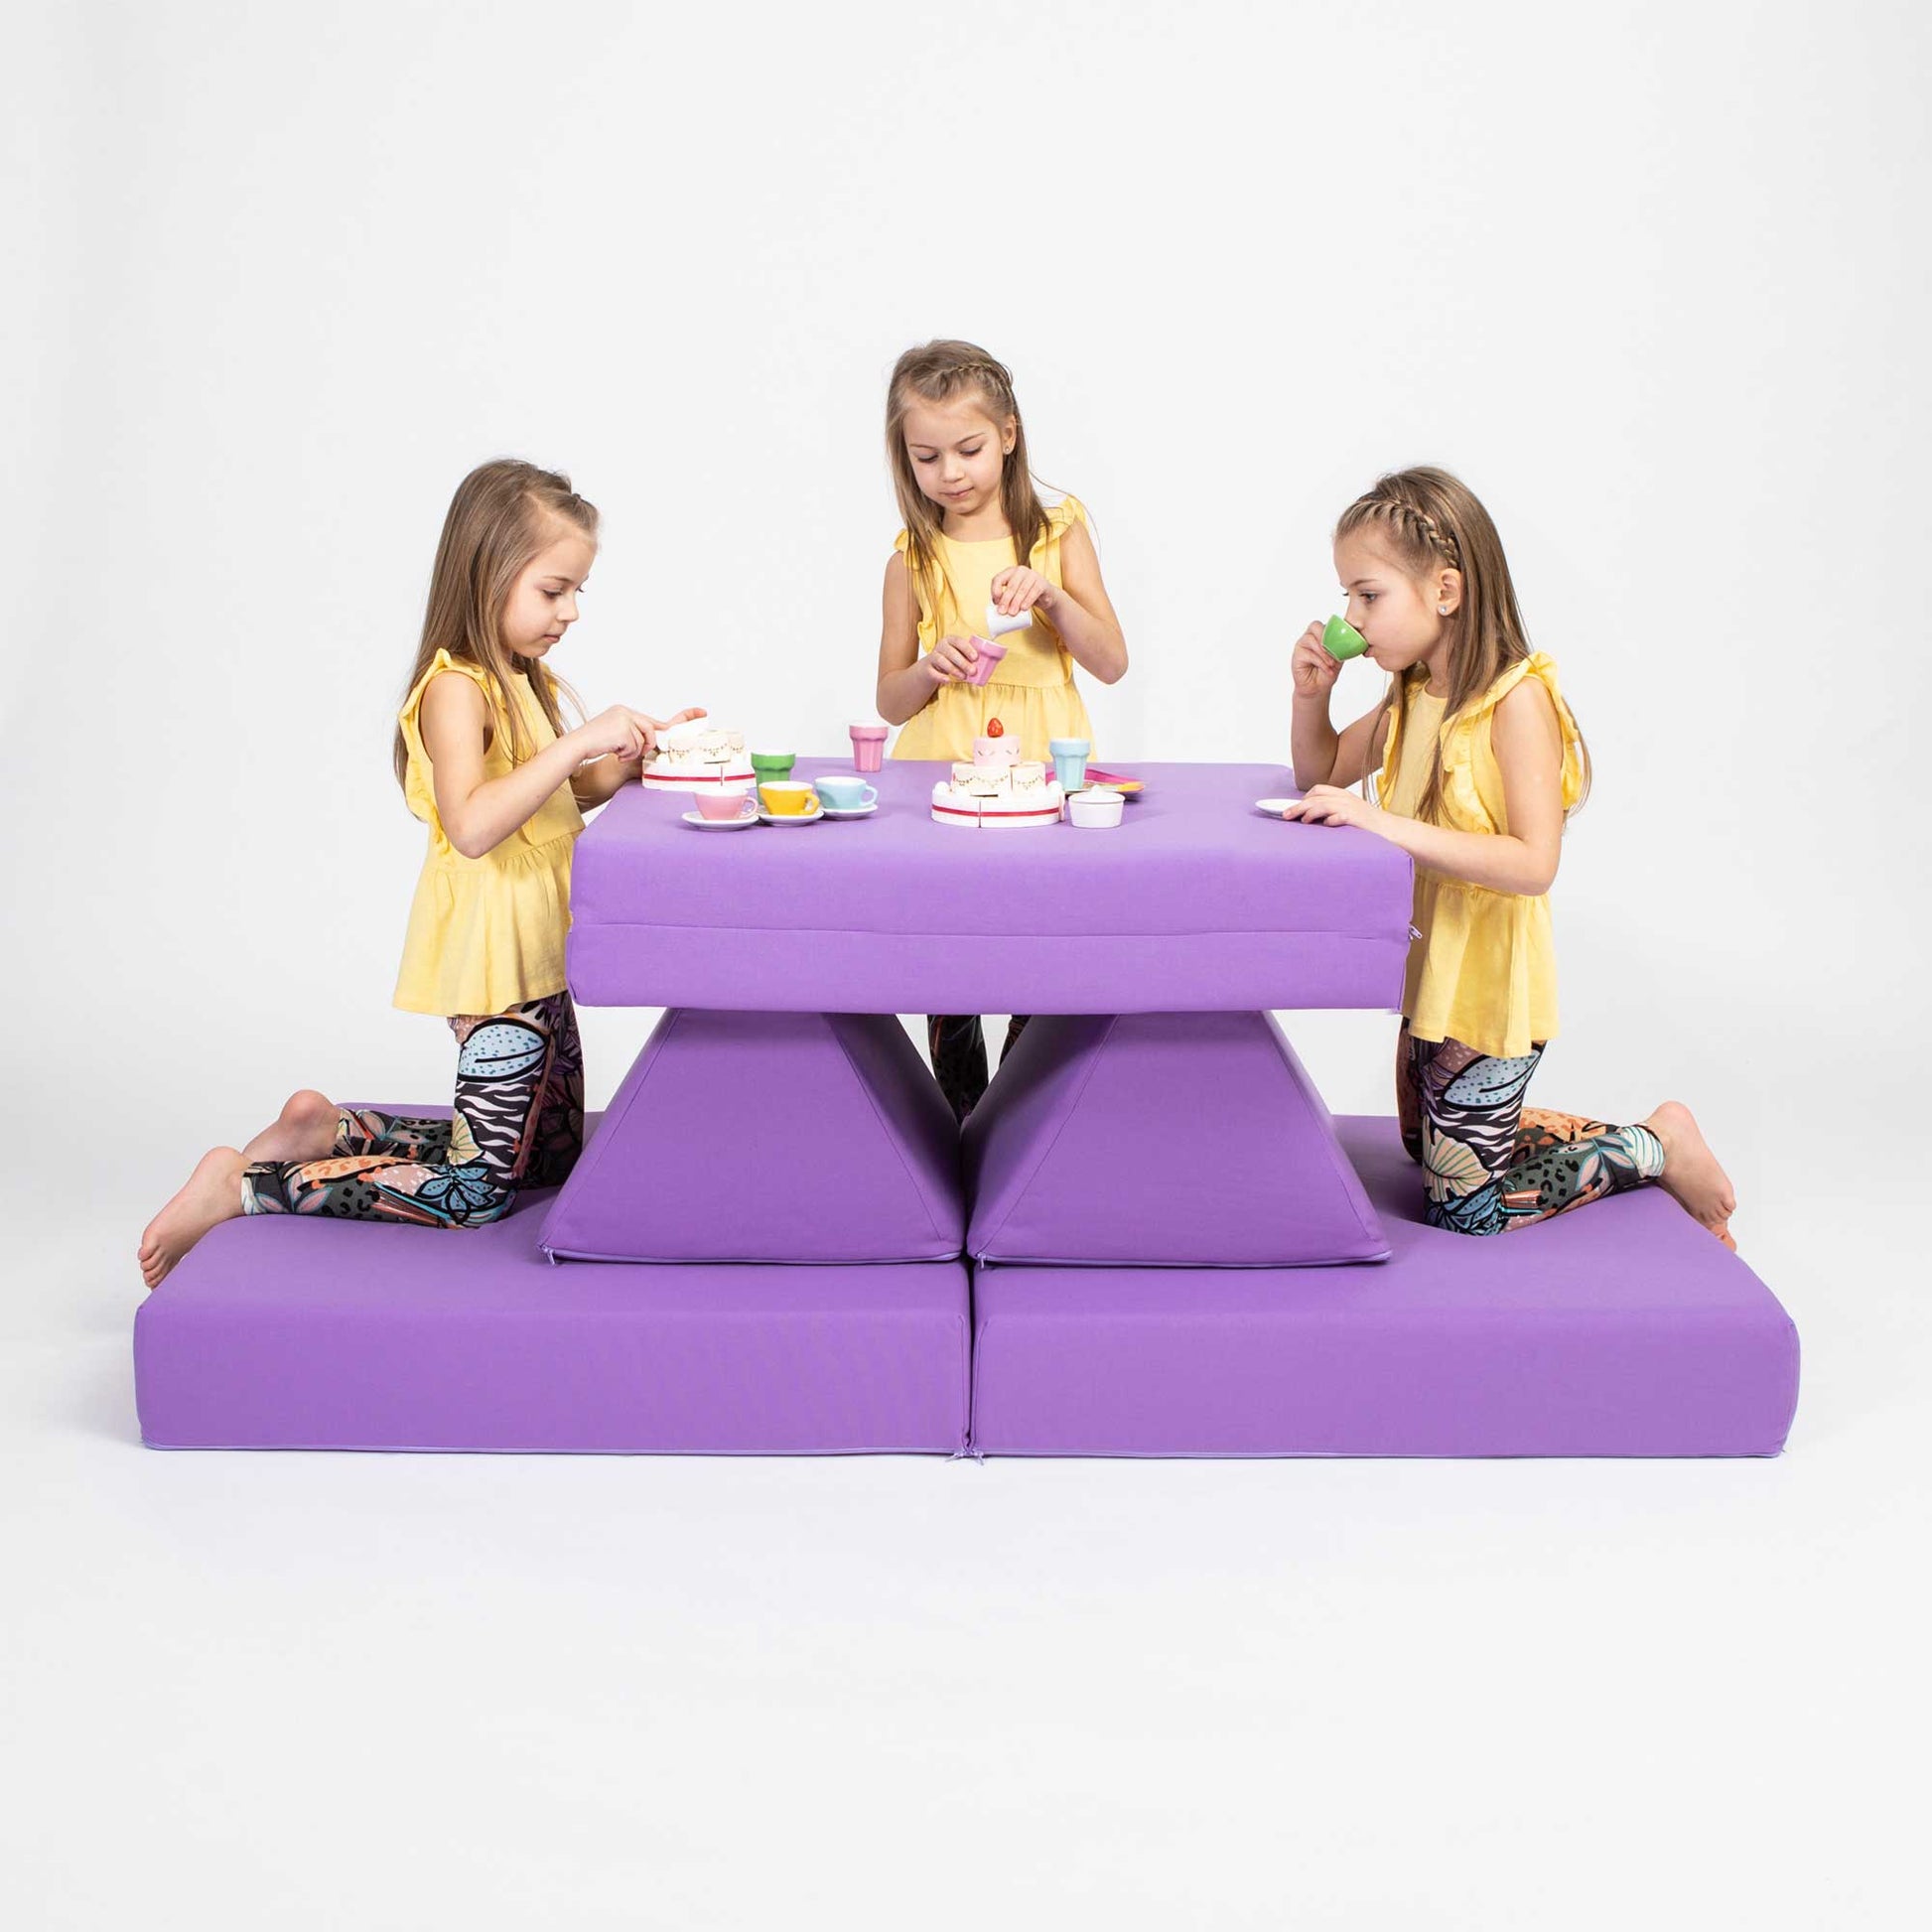 Three girls playing tea time on a purple Monboxy activity mat